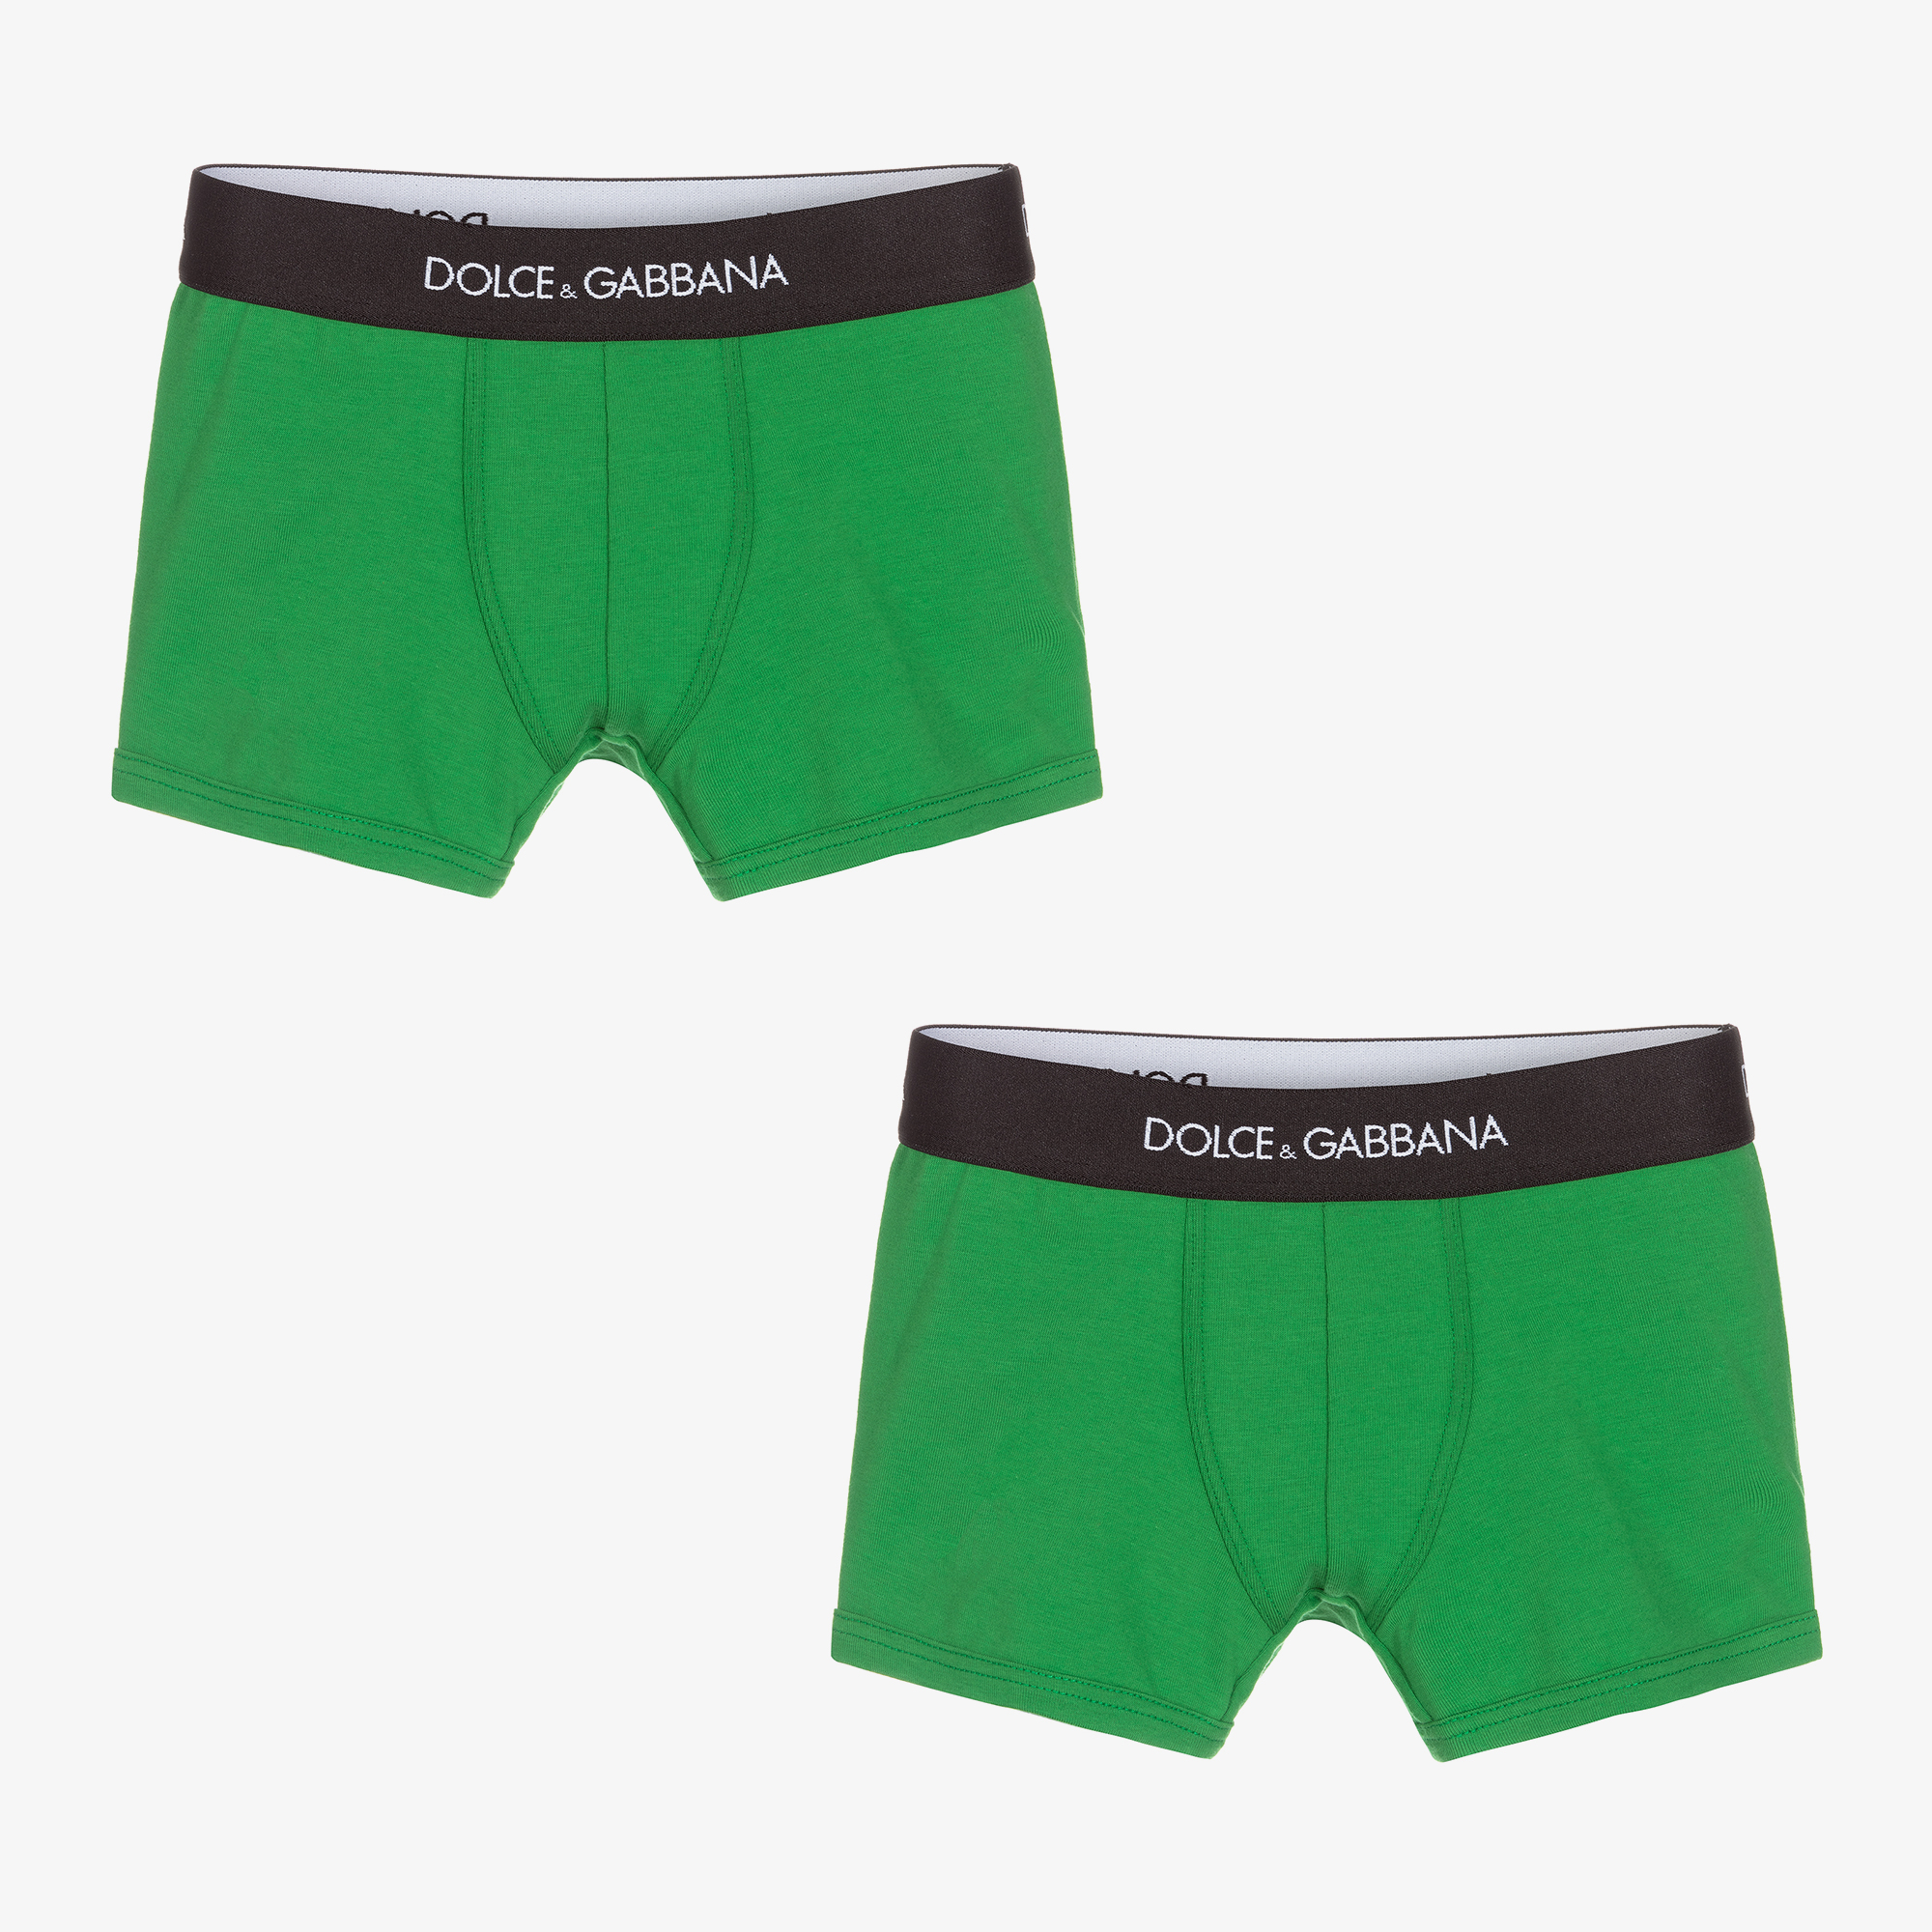 https://www.childrensalonoutlet.com/media/catalog/product/d/o/dolce-gabbana-green-logo-boxers-2-pack-425113-1768b9568e849462029d8981d2ca76c67a75833d.jpg